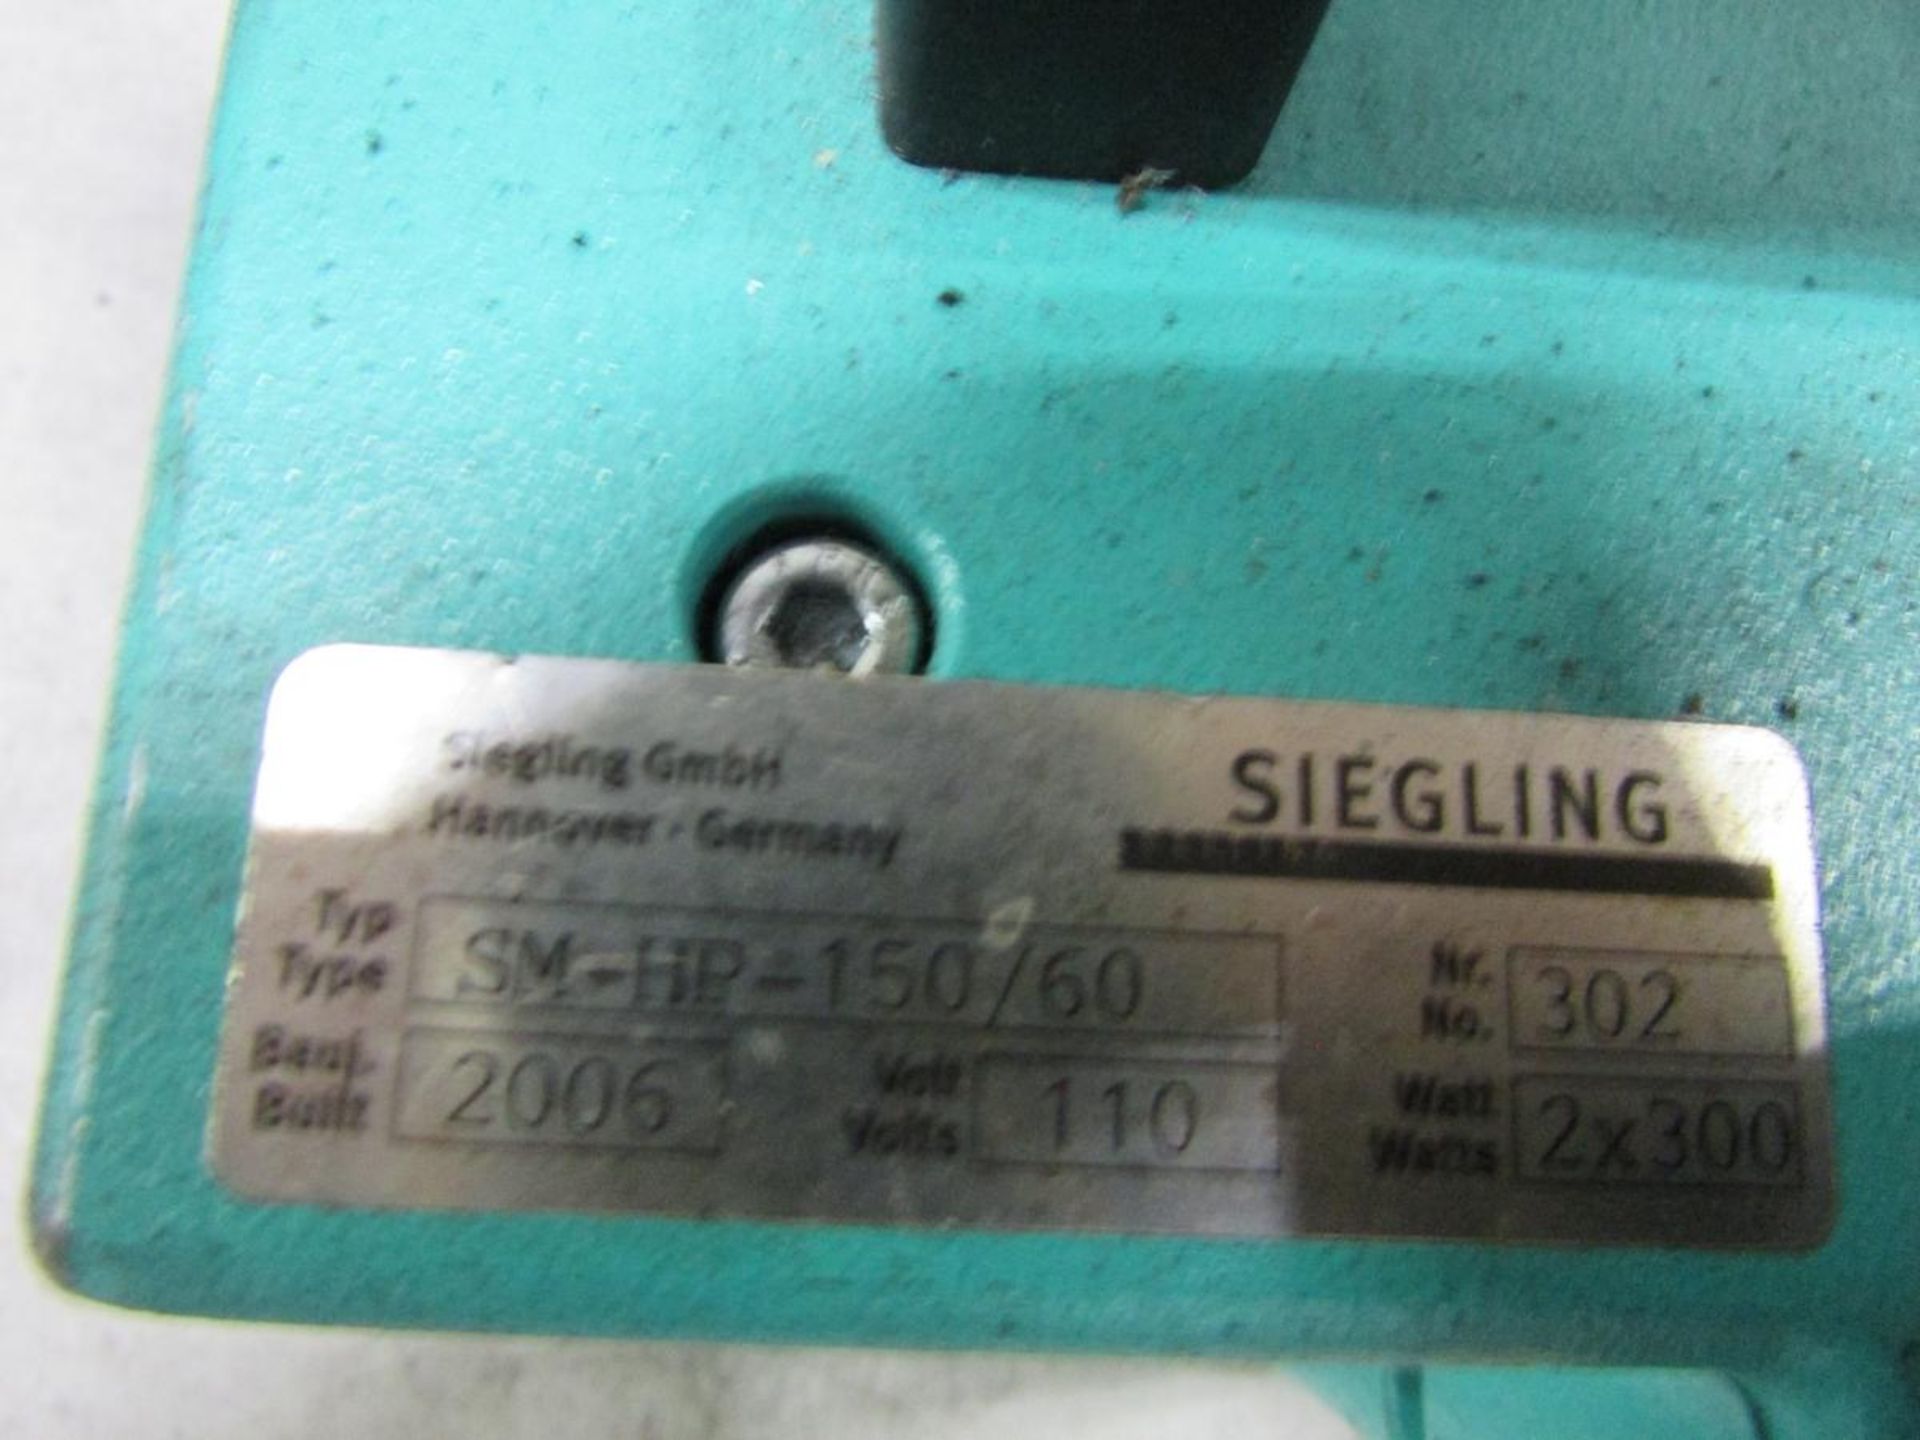 Siegling SM-HP-150/60 Melt Splicer Press - Image 4 of 4